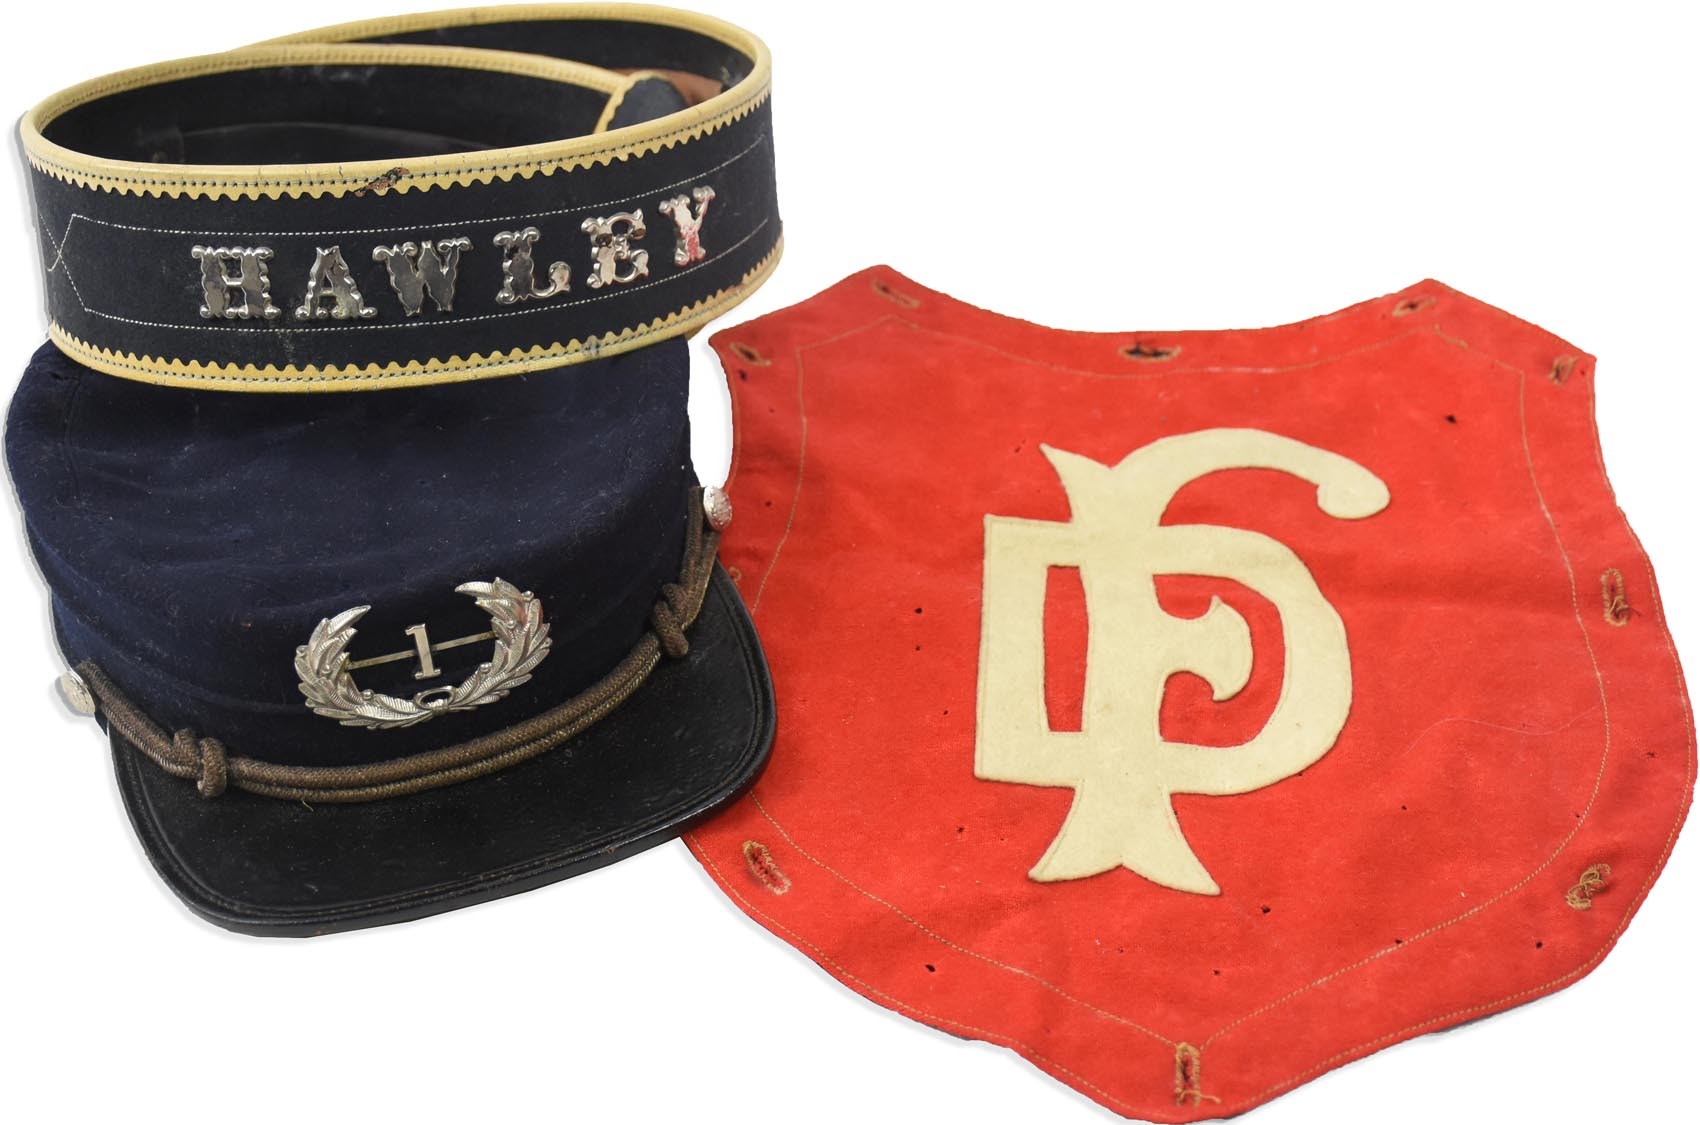 Rock And Pop Culture - 19th Century Fireman's Bib Front, Hat & Belt - Undeniable Baseball "Look"